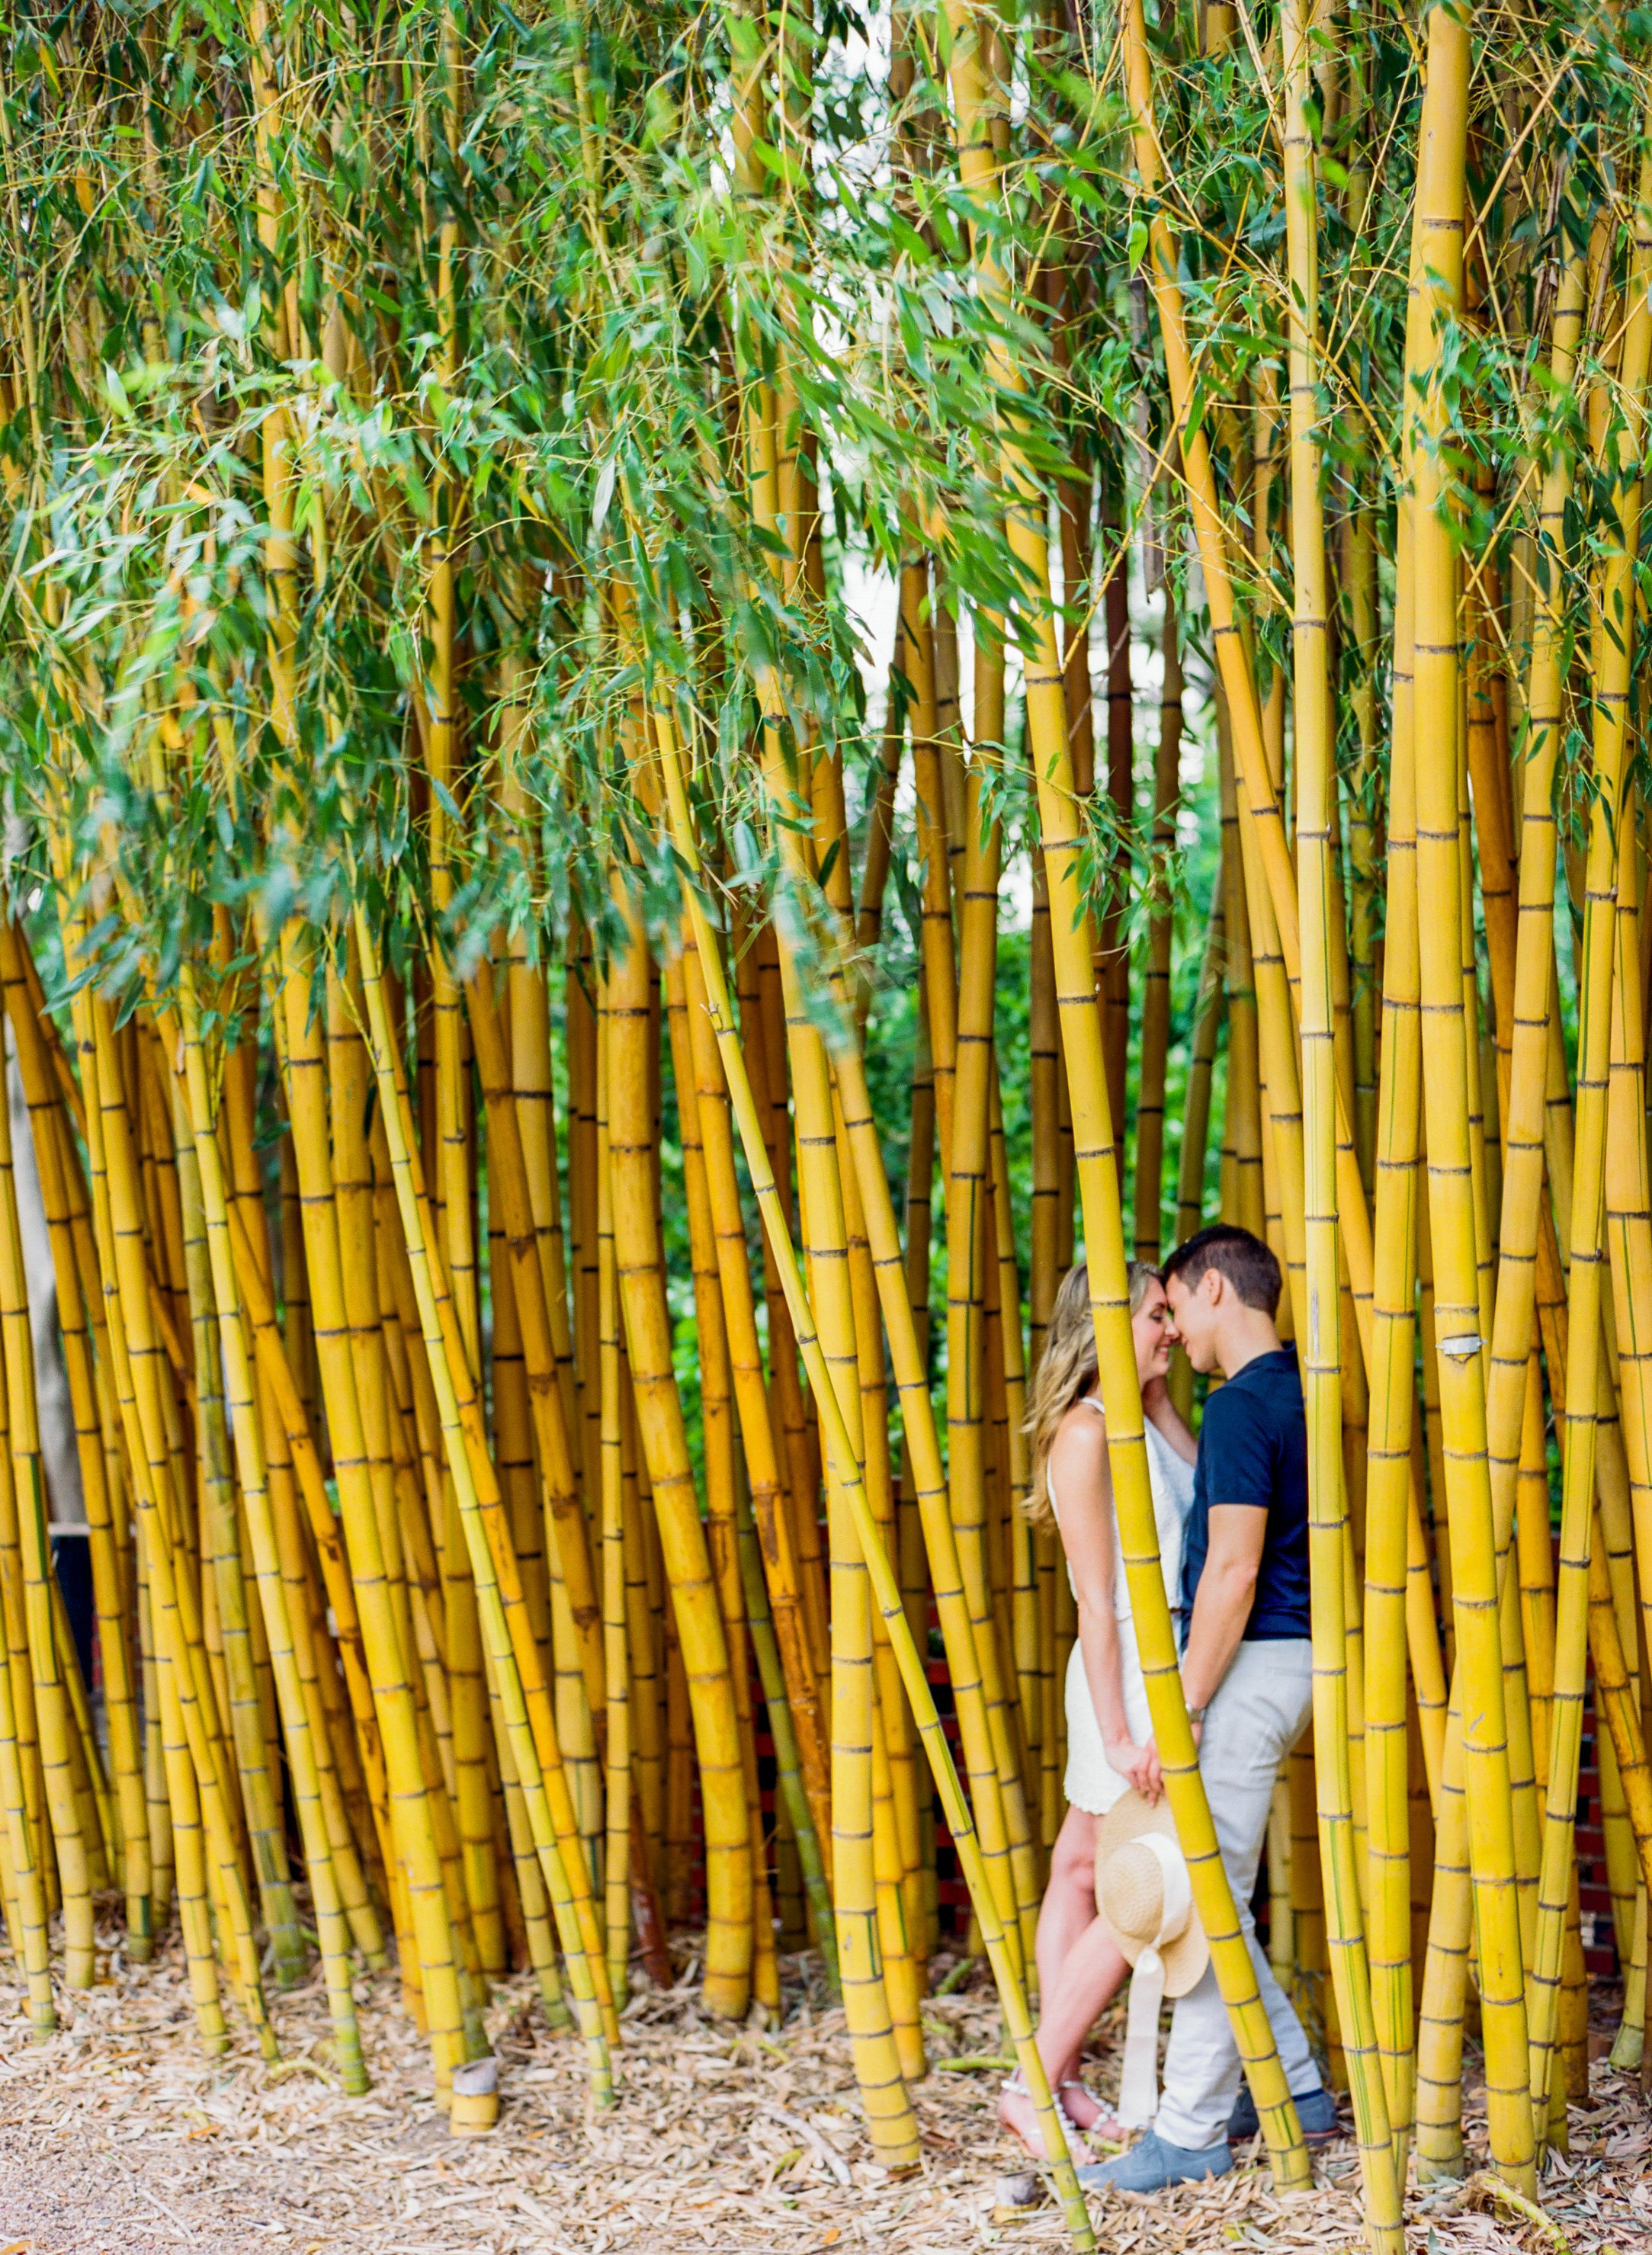  Blair + Phillip in the bamboo - © Lauren Rosenau Photography 